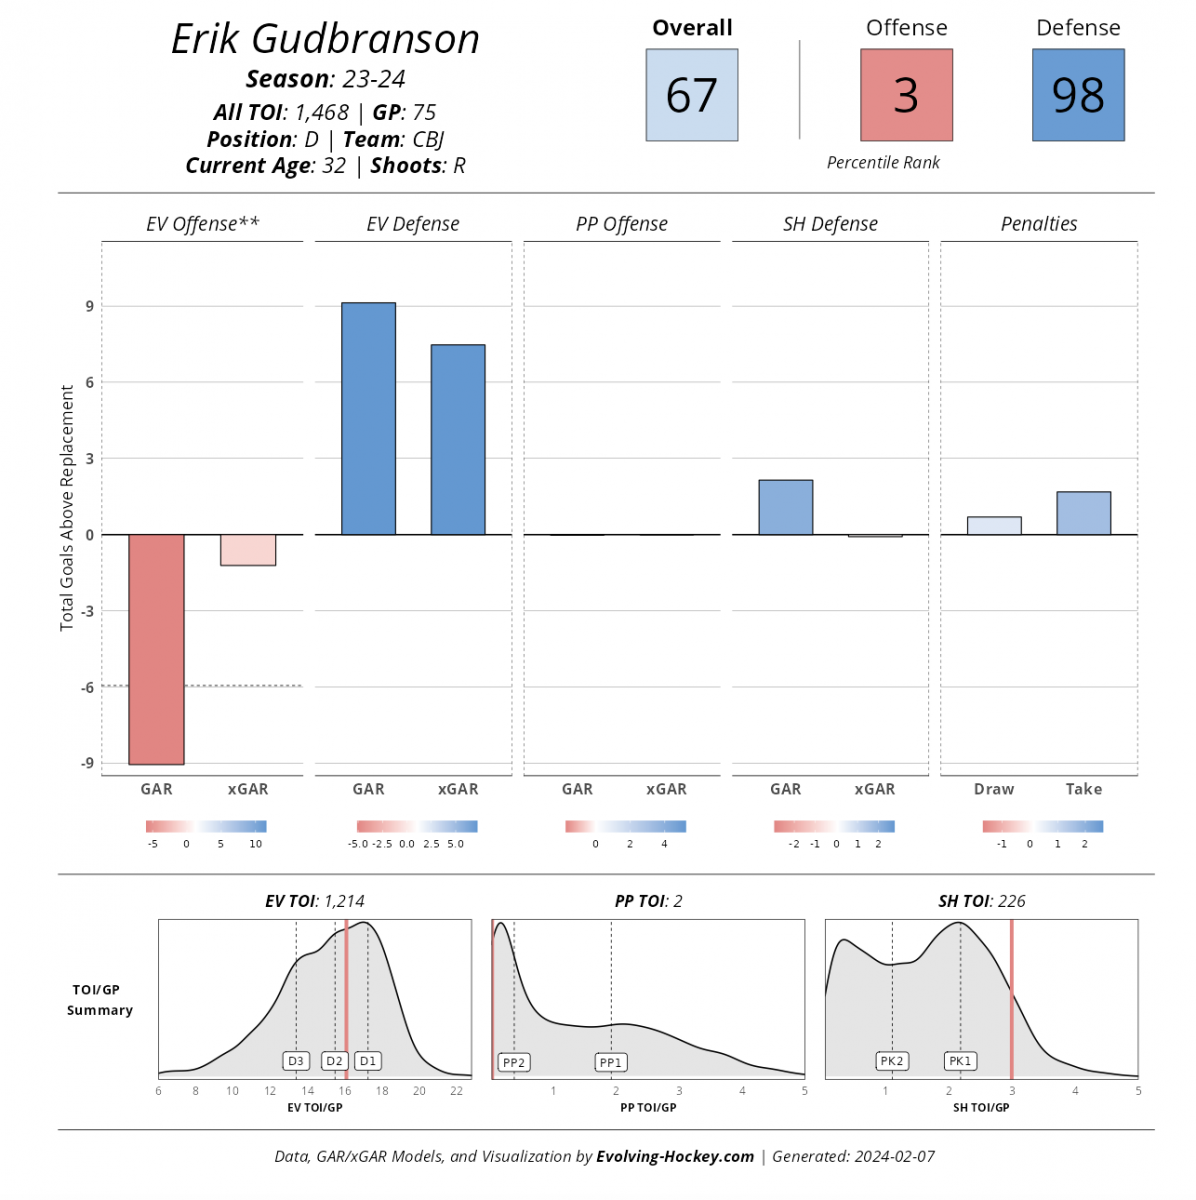 Erik Gudbranson's '23-'24 player card, Evolving-Hockey.com